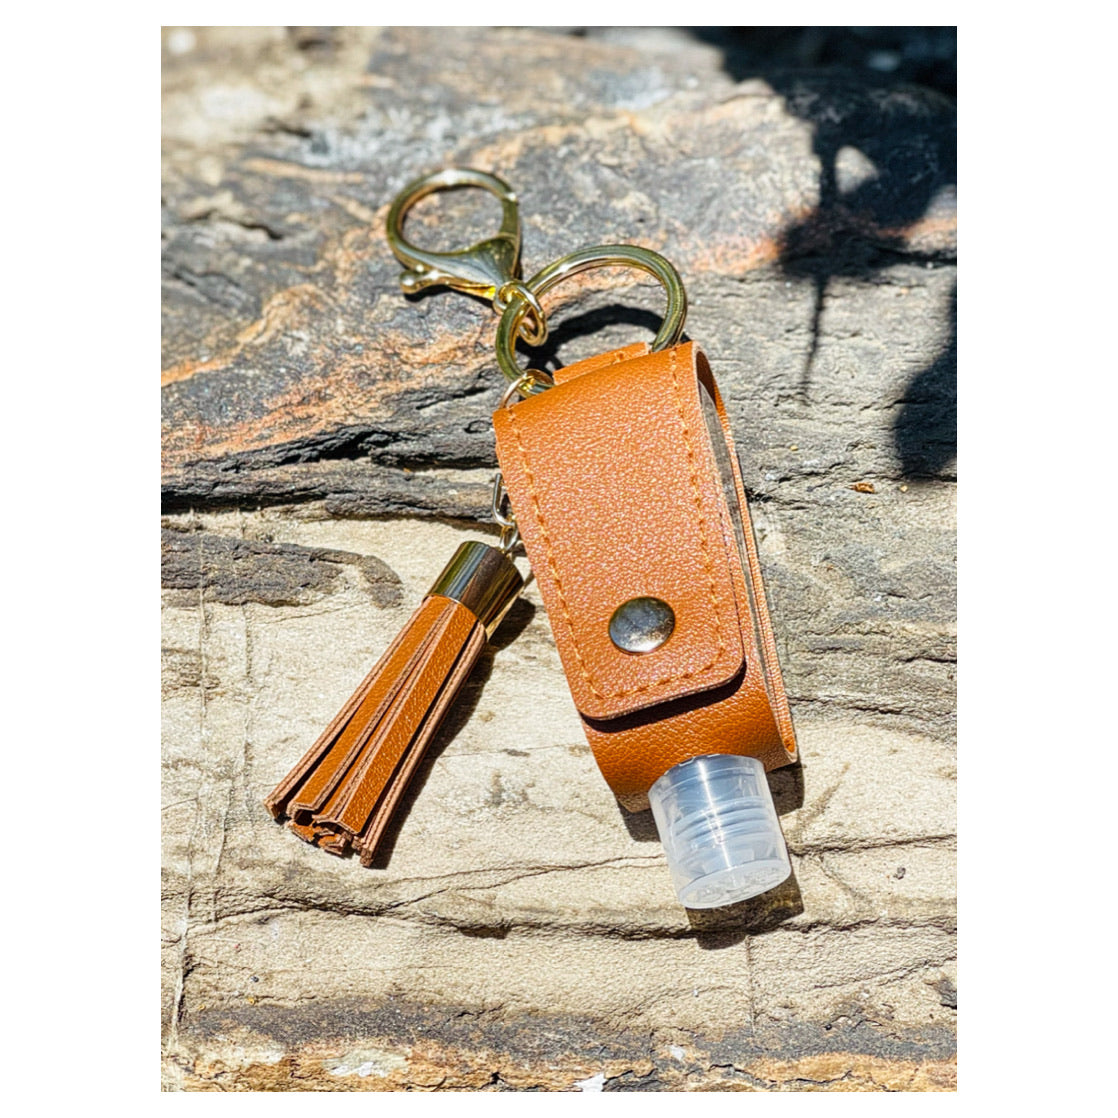 The T-BOTTLE keychain